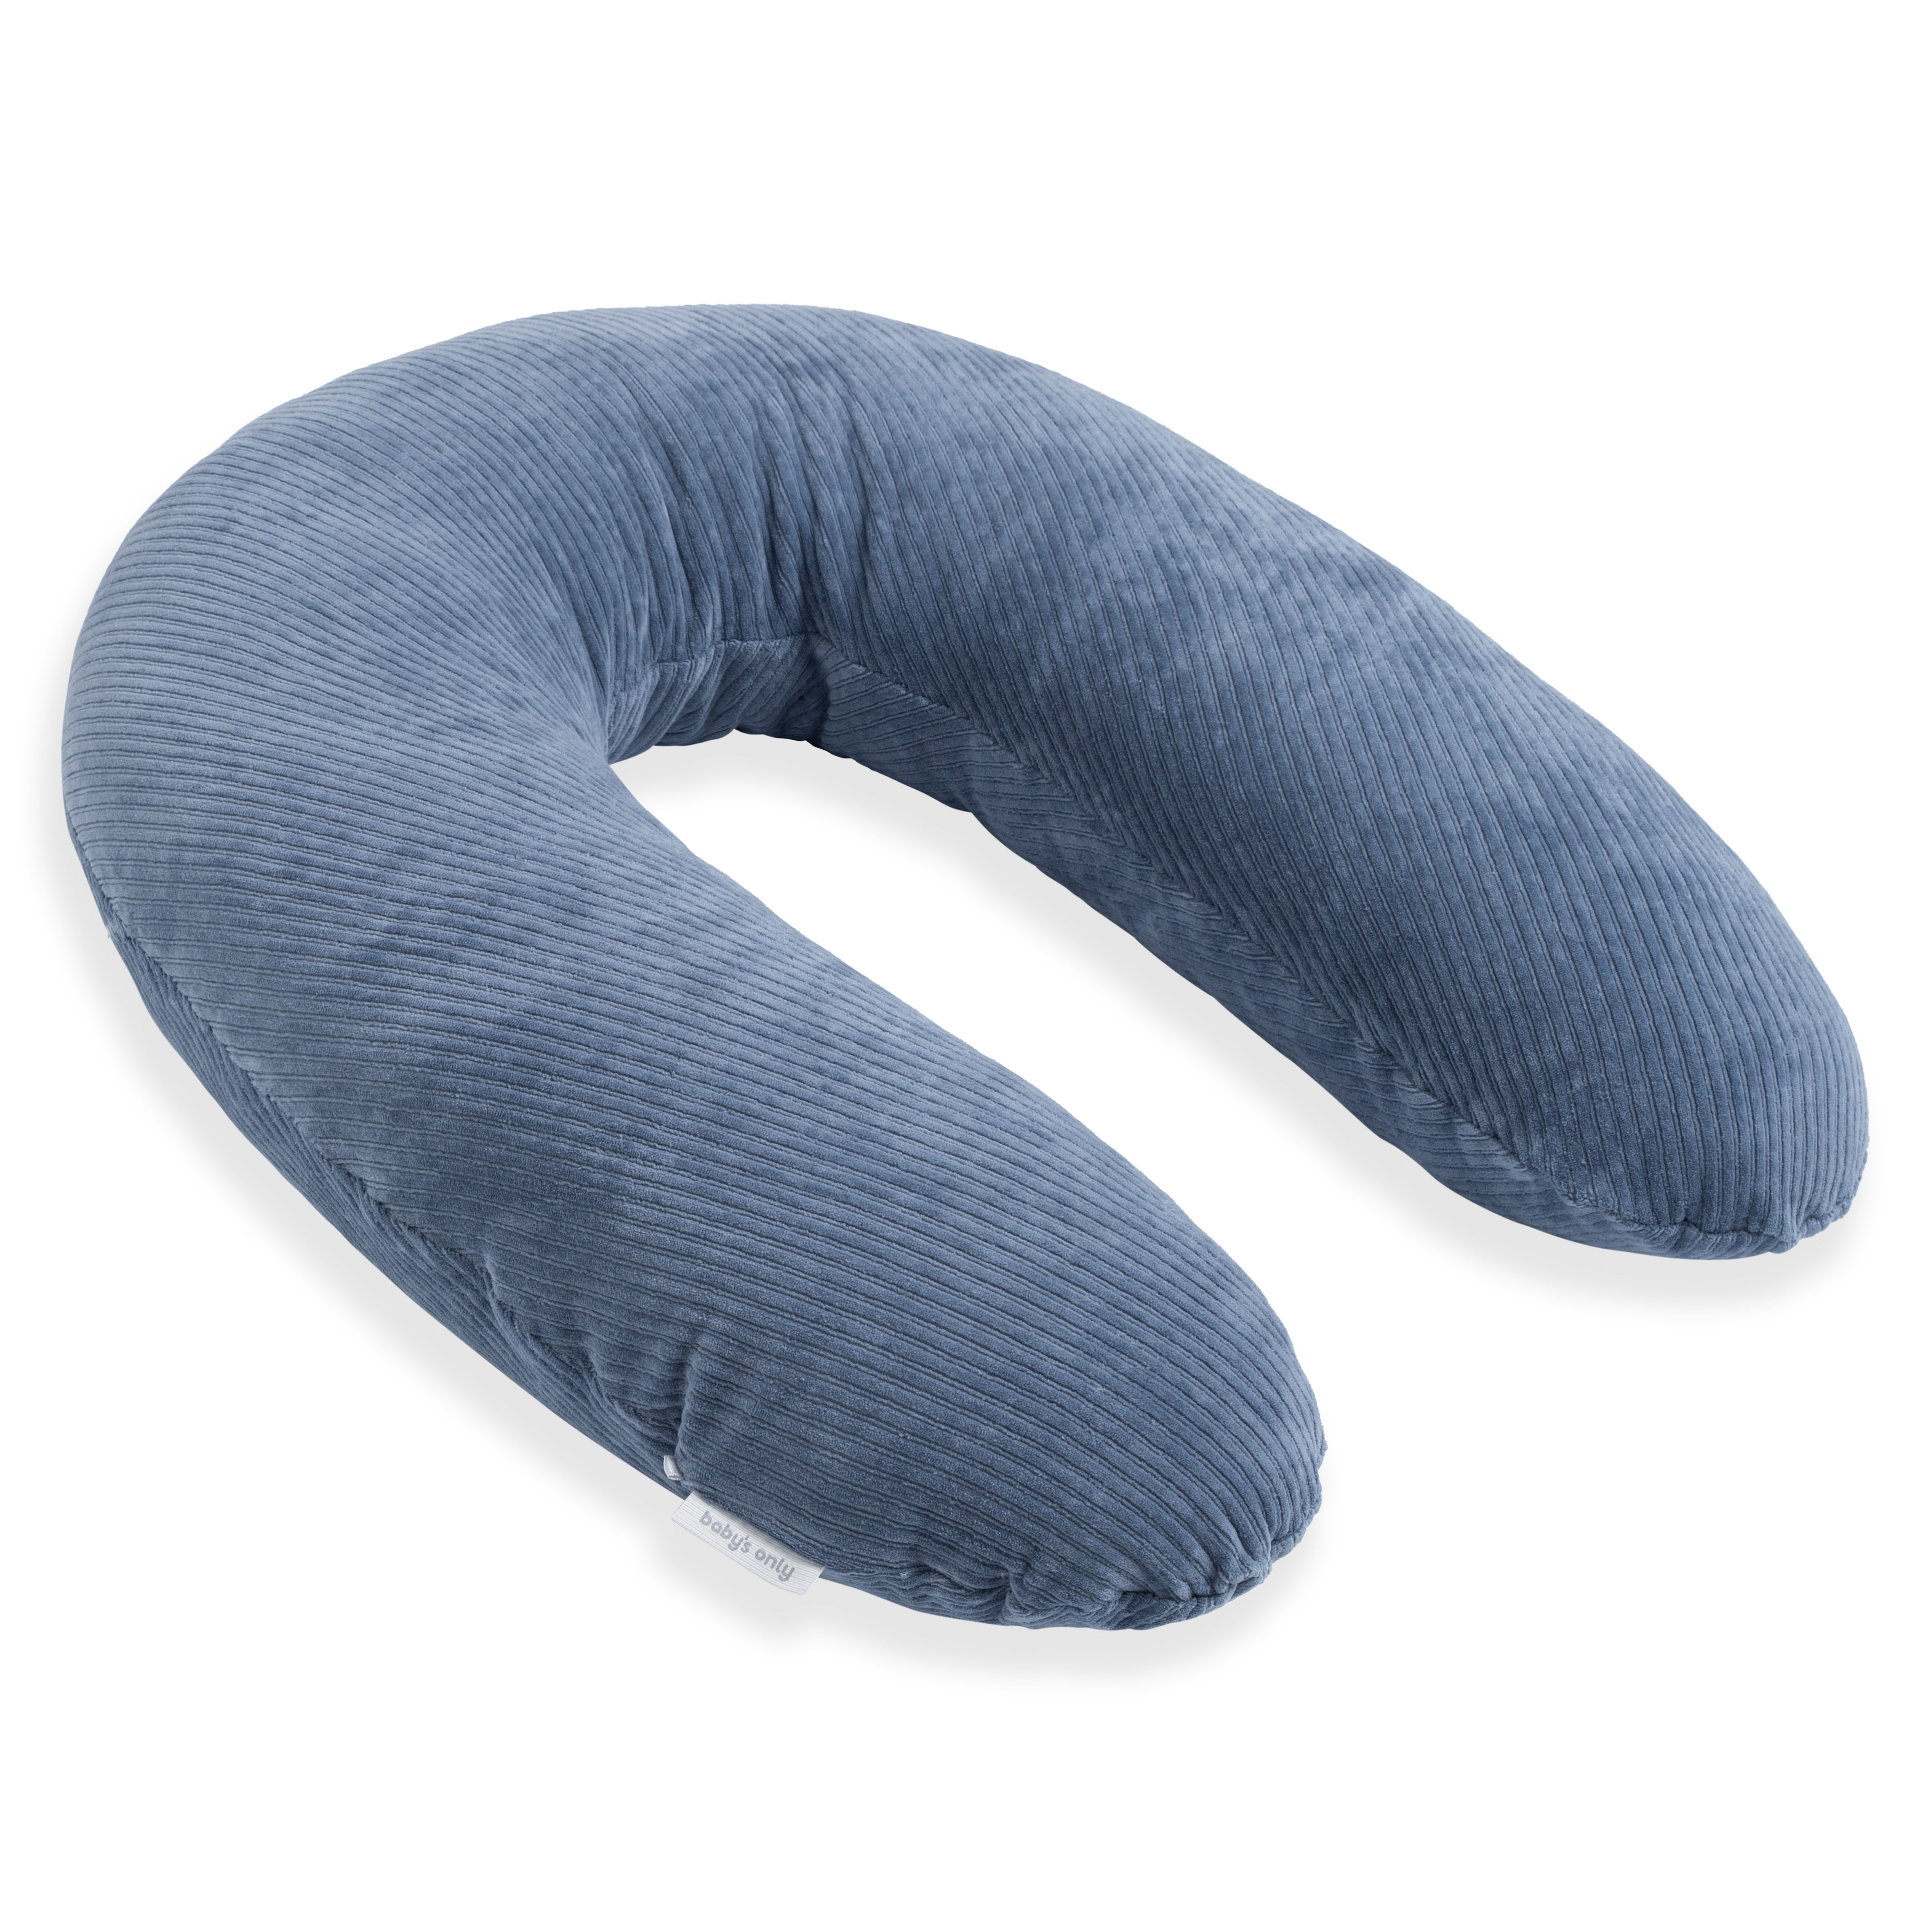 Nursing pillow Sense vintage blue